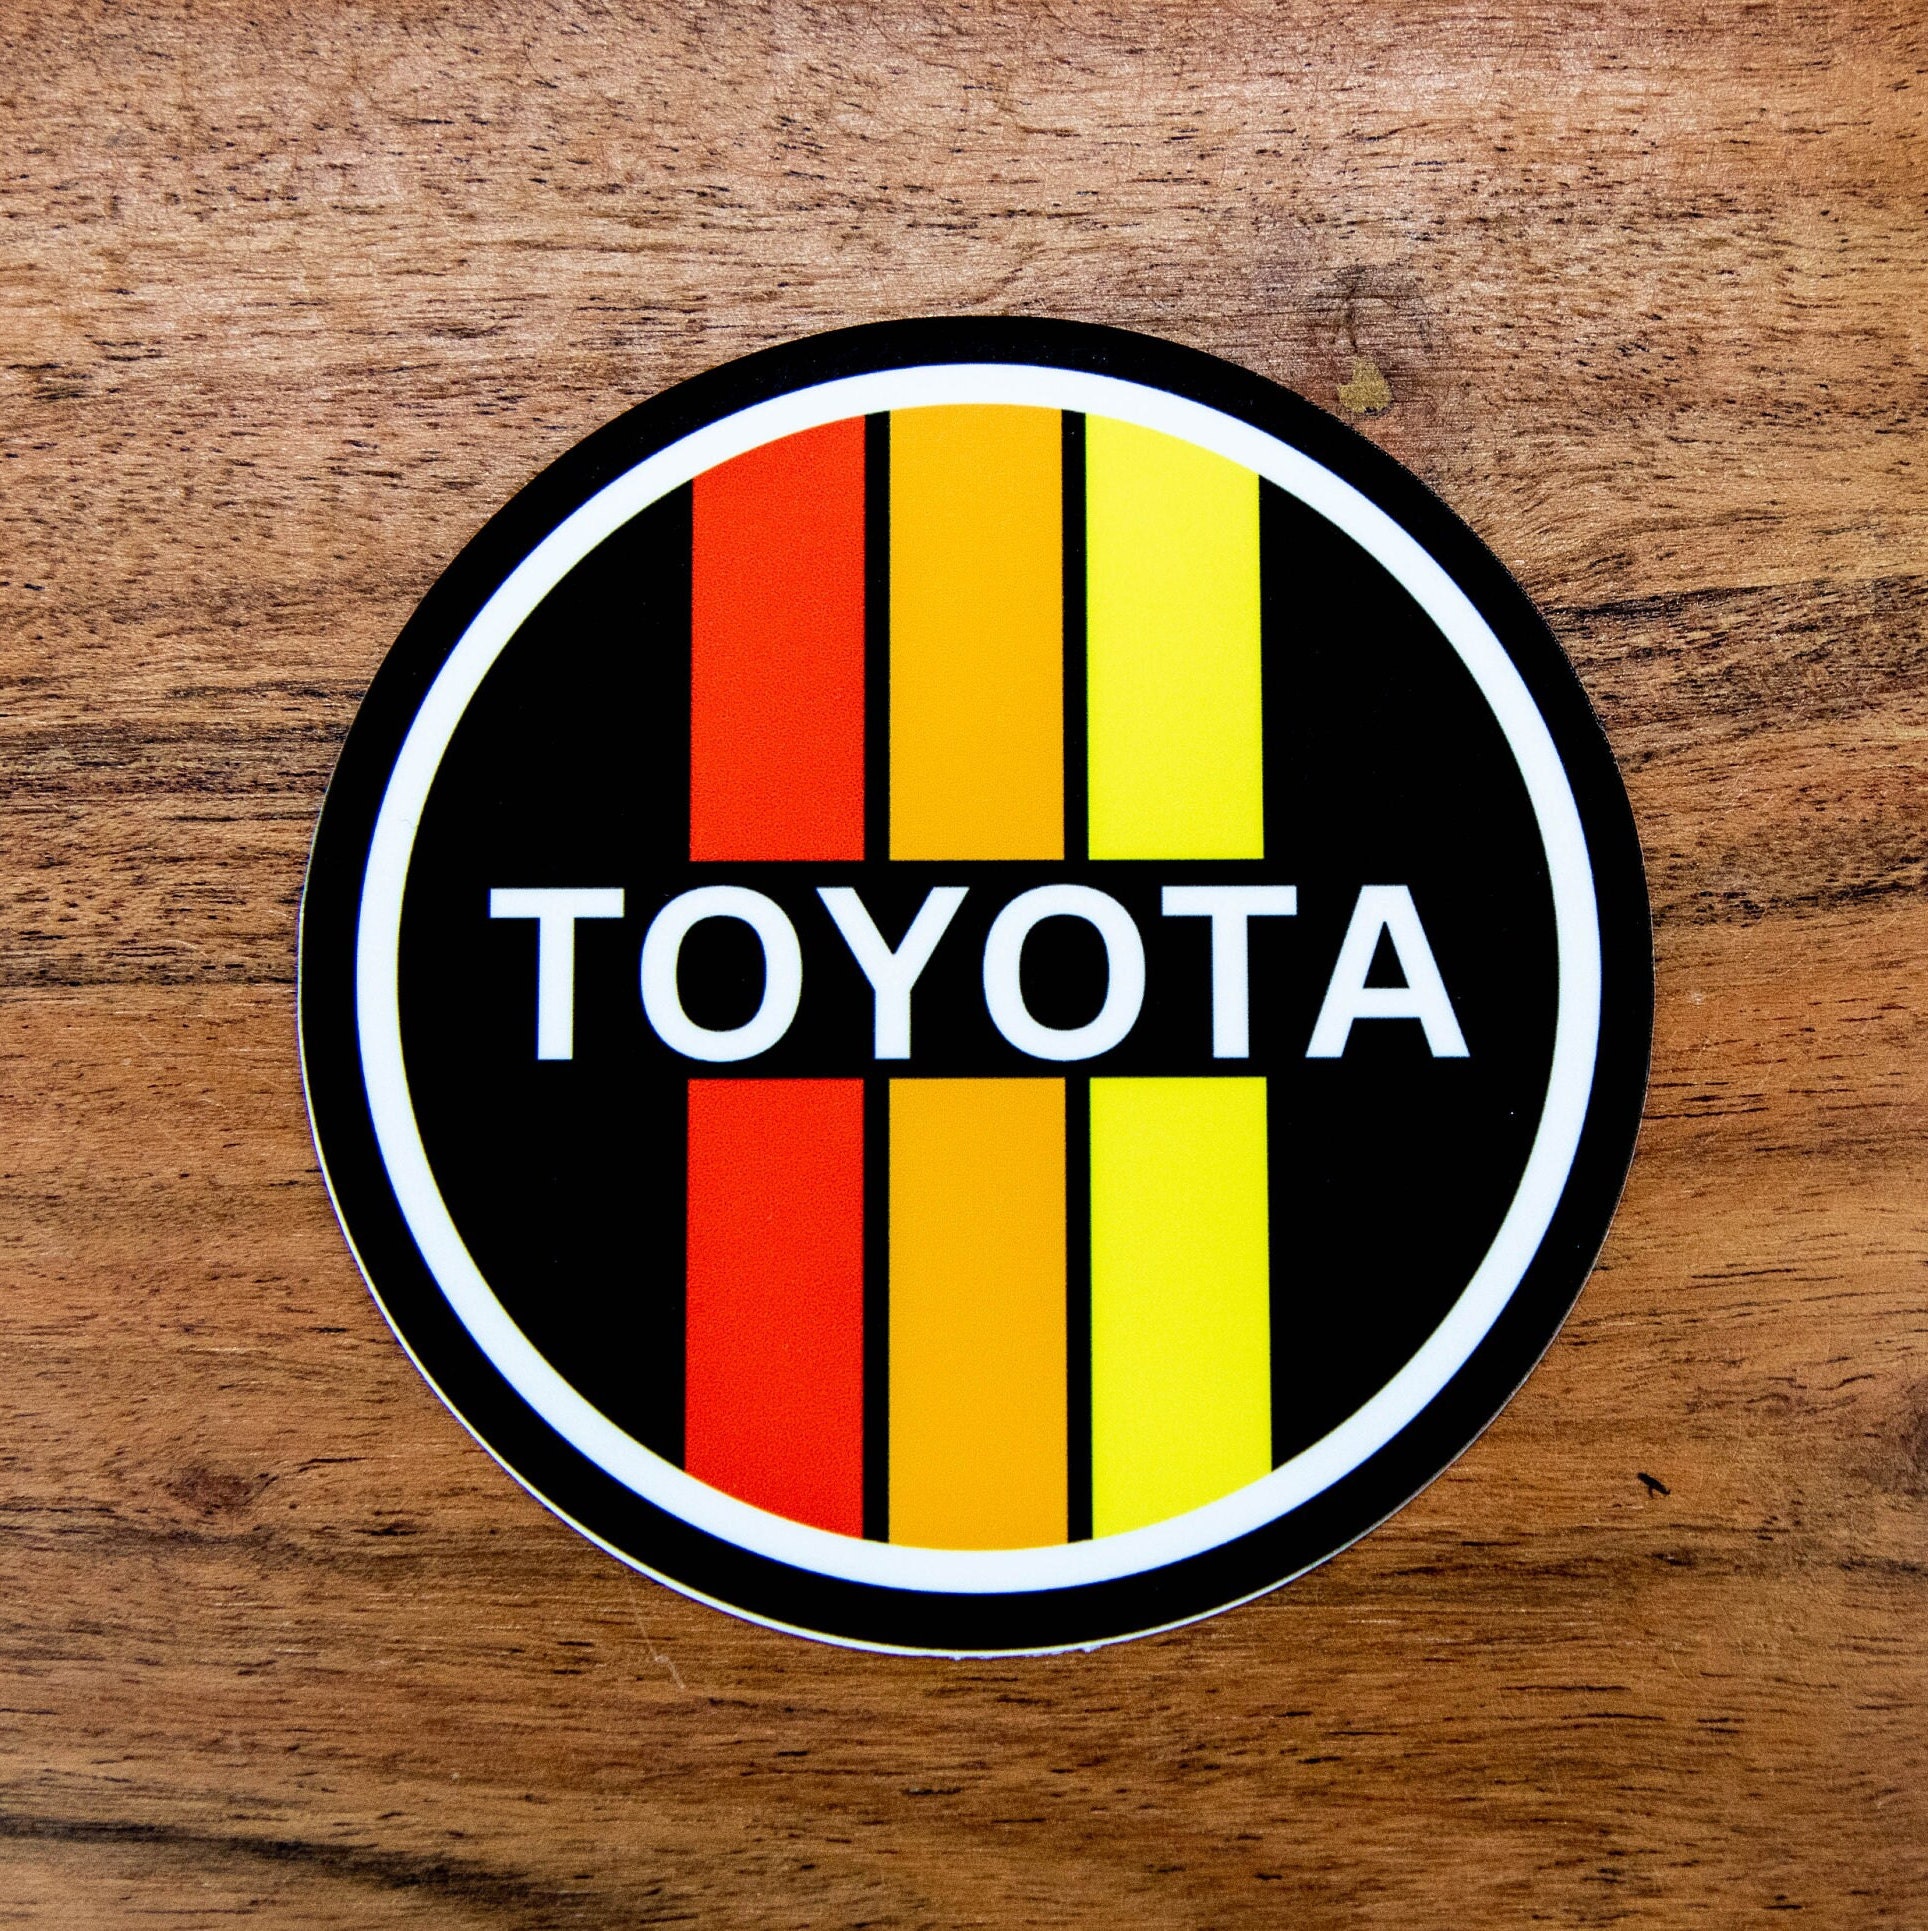 Retro Scheme Toyota 3.5 inch Glossy Sticker